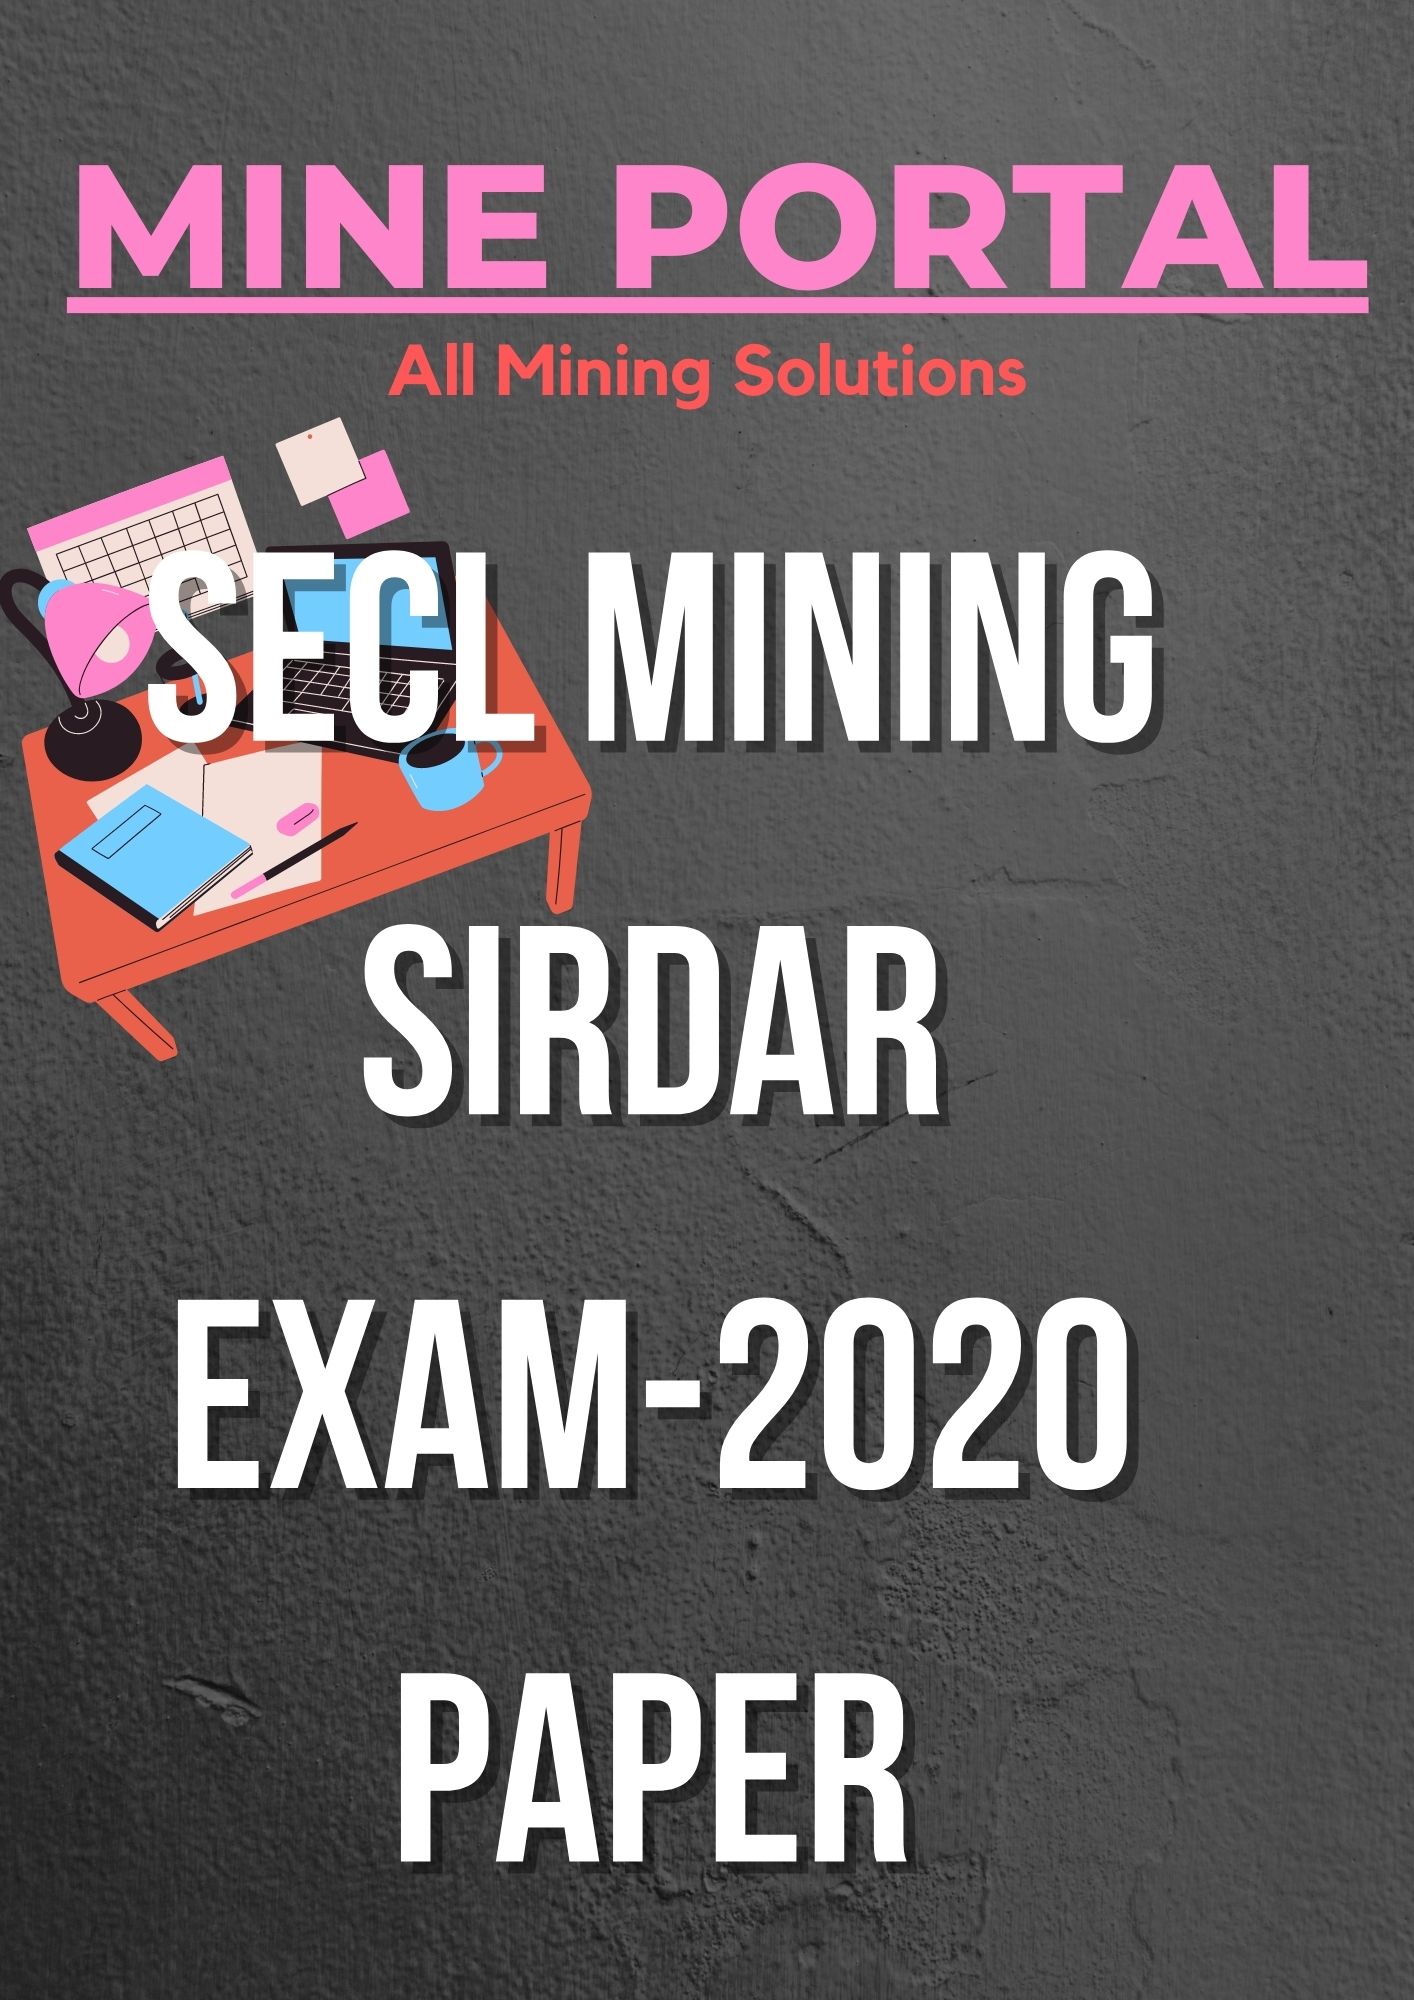 SECL Mining Sirdar EXAM-2020 PAPER